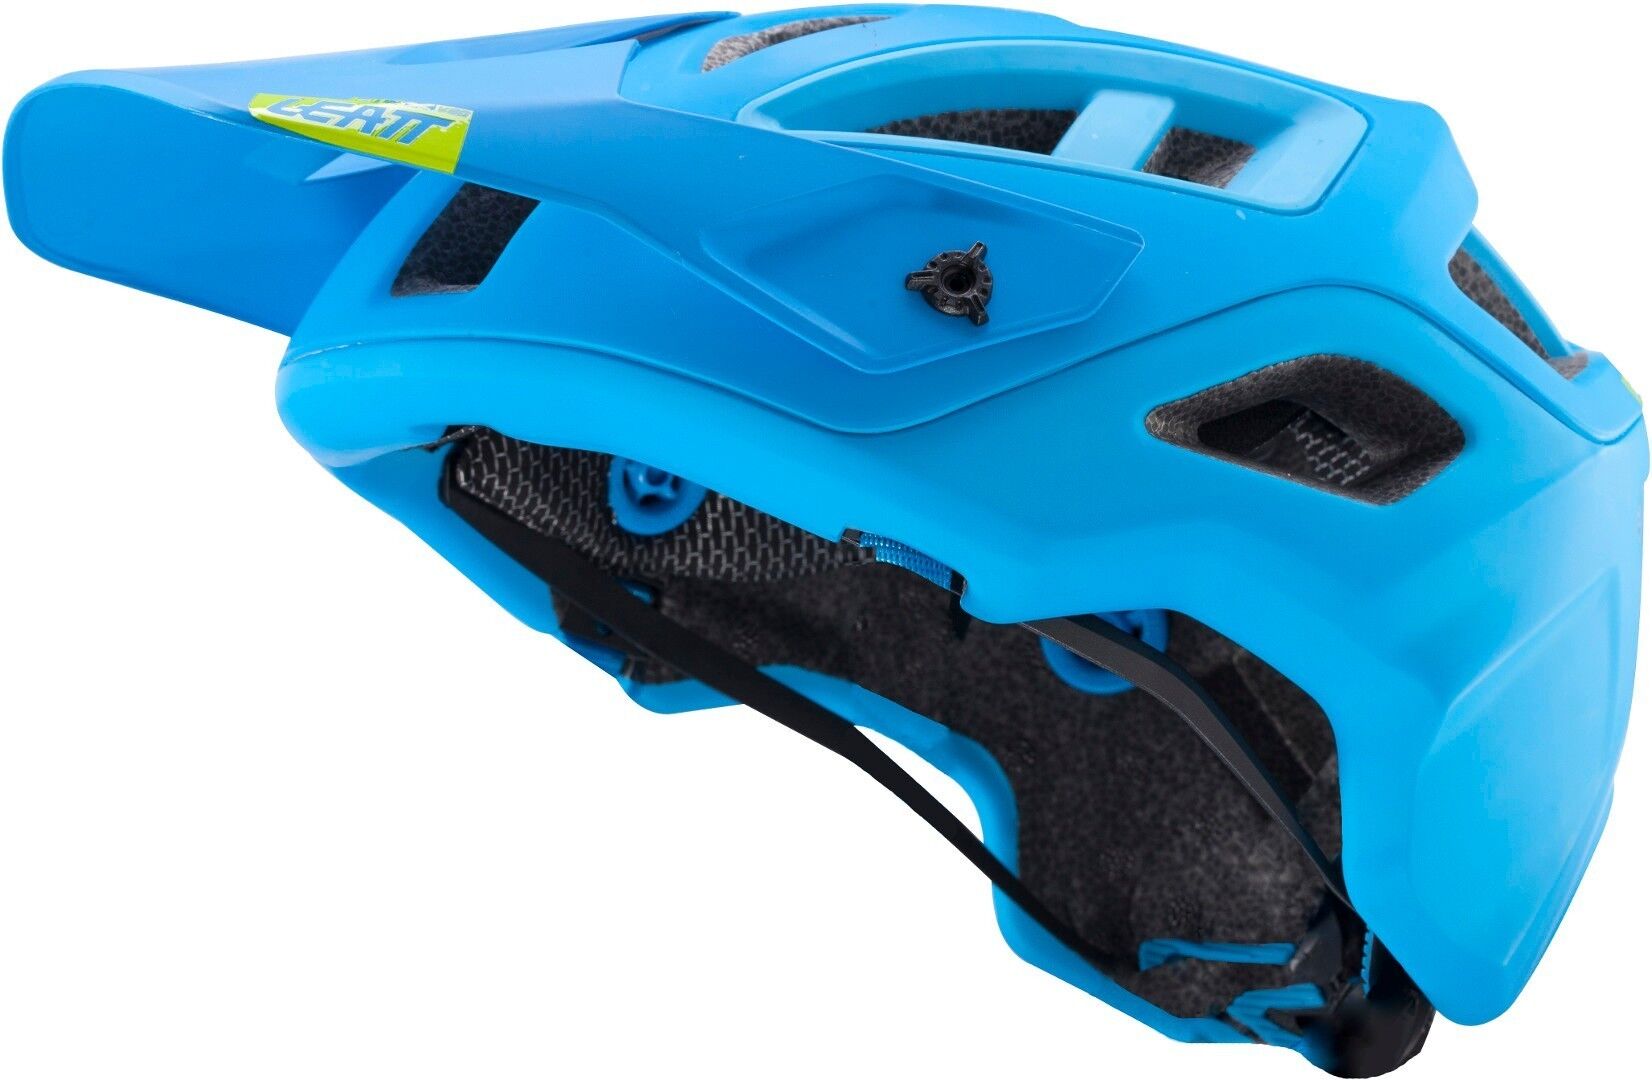 Leatt Dbx 3.0 All Mountain Bicycle Helmet  - Blue